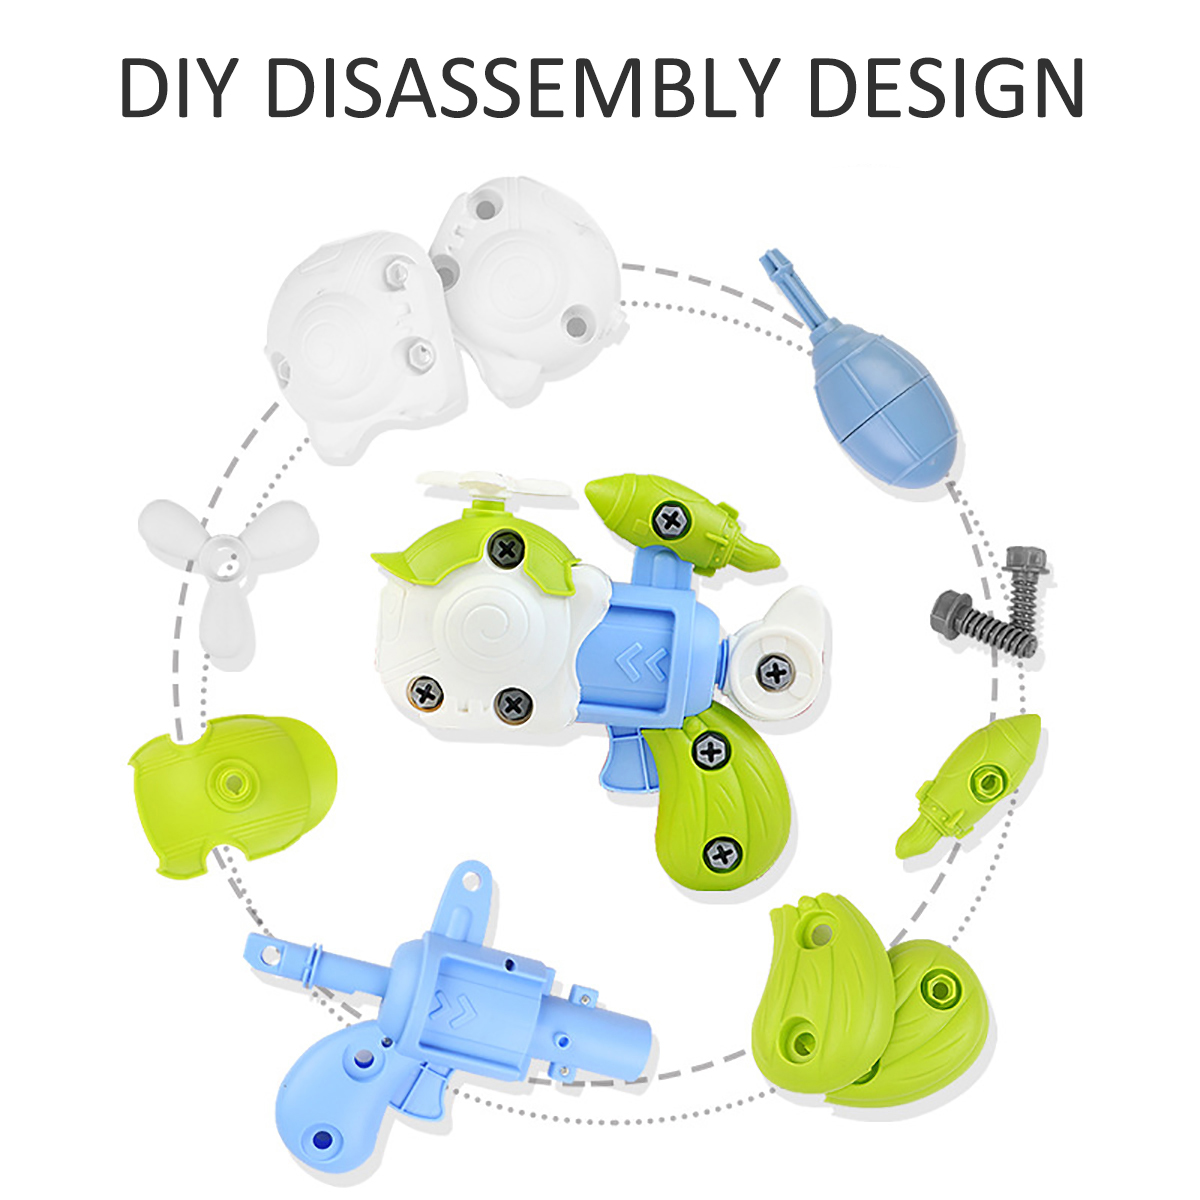 DIY-Disassembly-DinosaurAirplane-Guns-Play-Set-Model-Blocks-Assemble-Educational-Toy-for-Kids-Gift-1829732-6